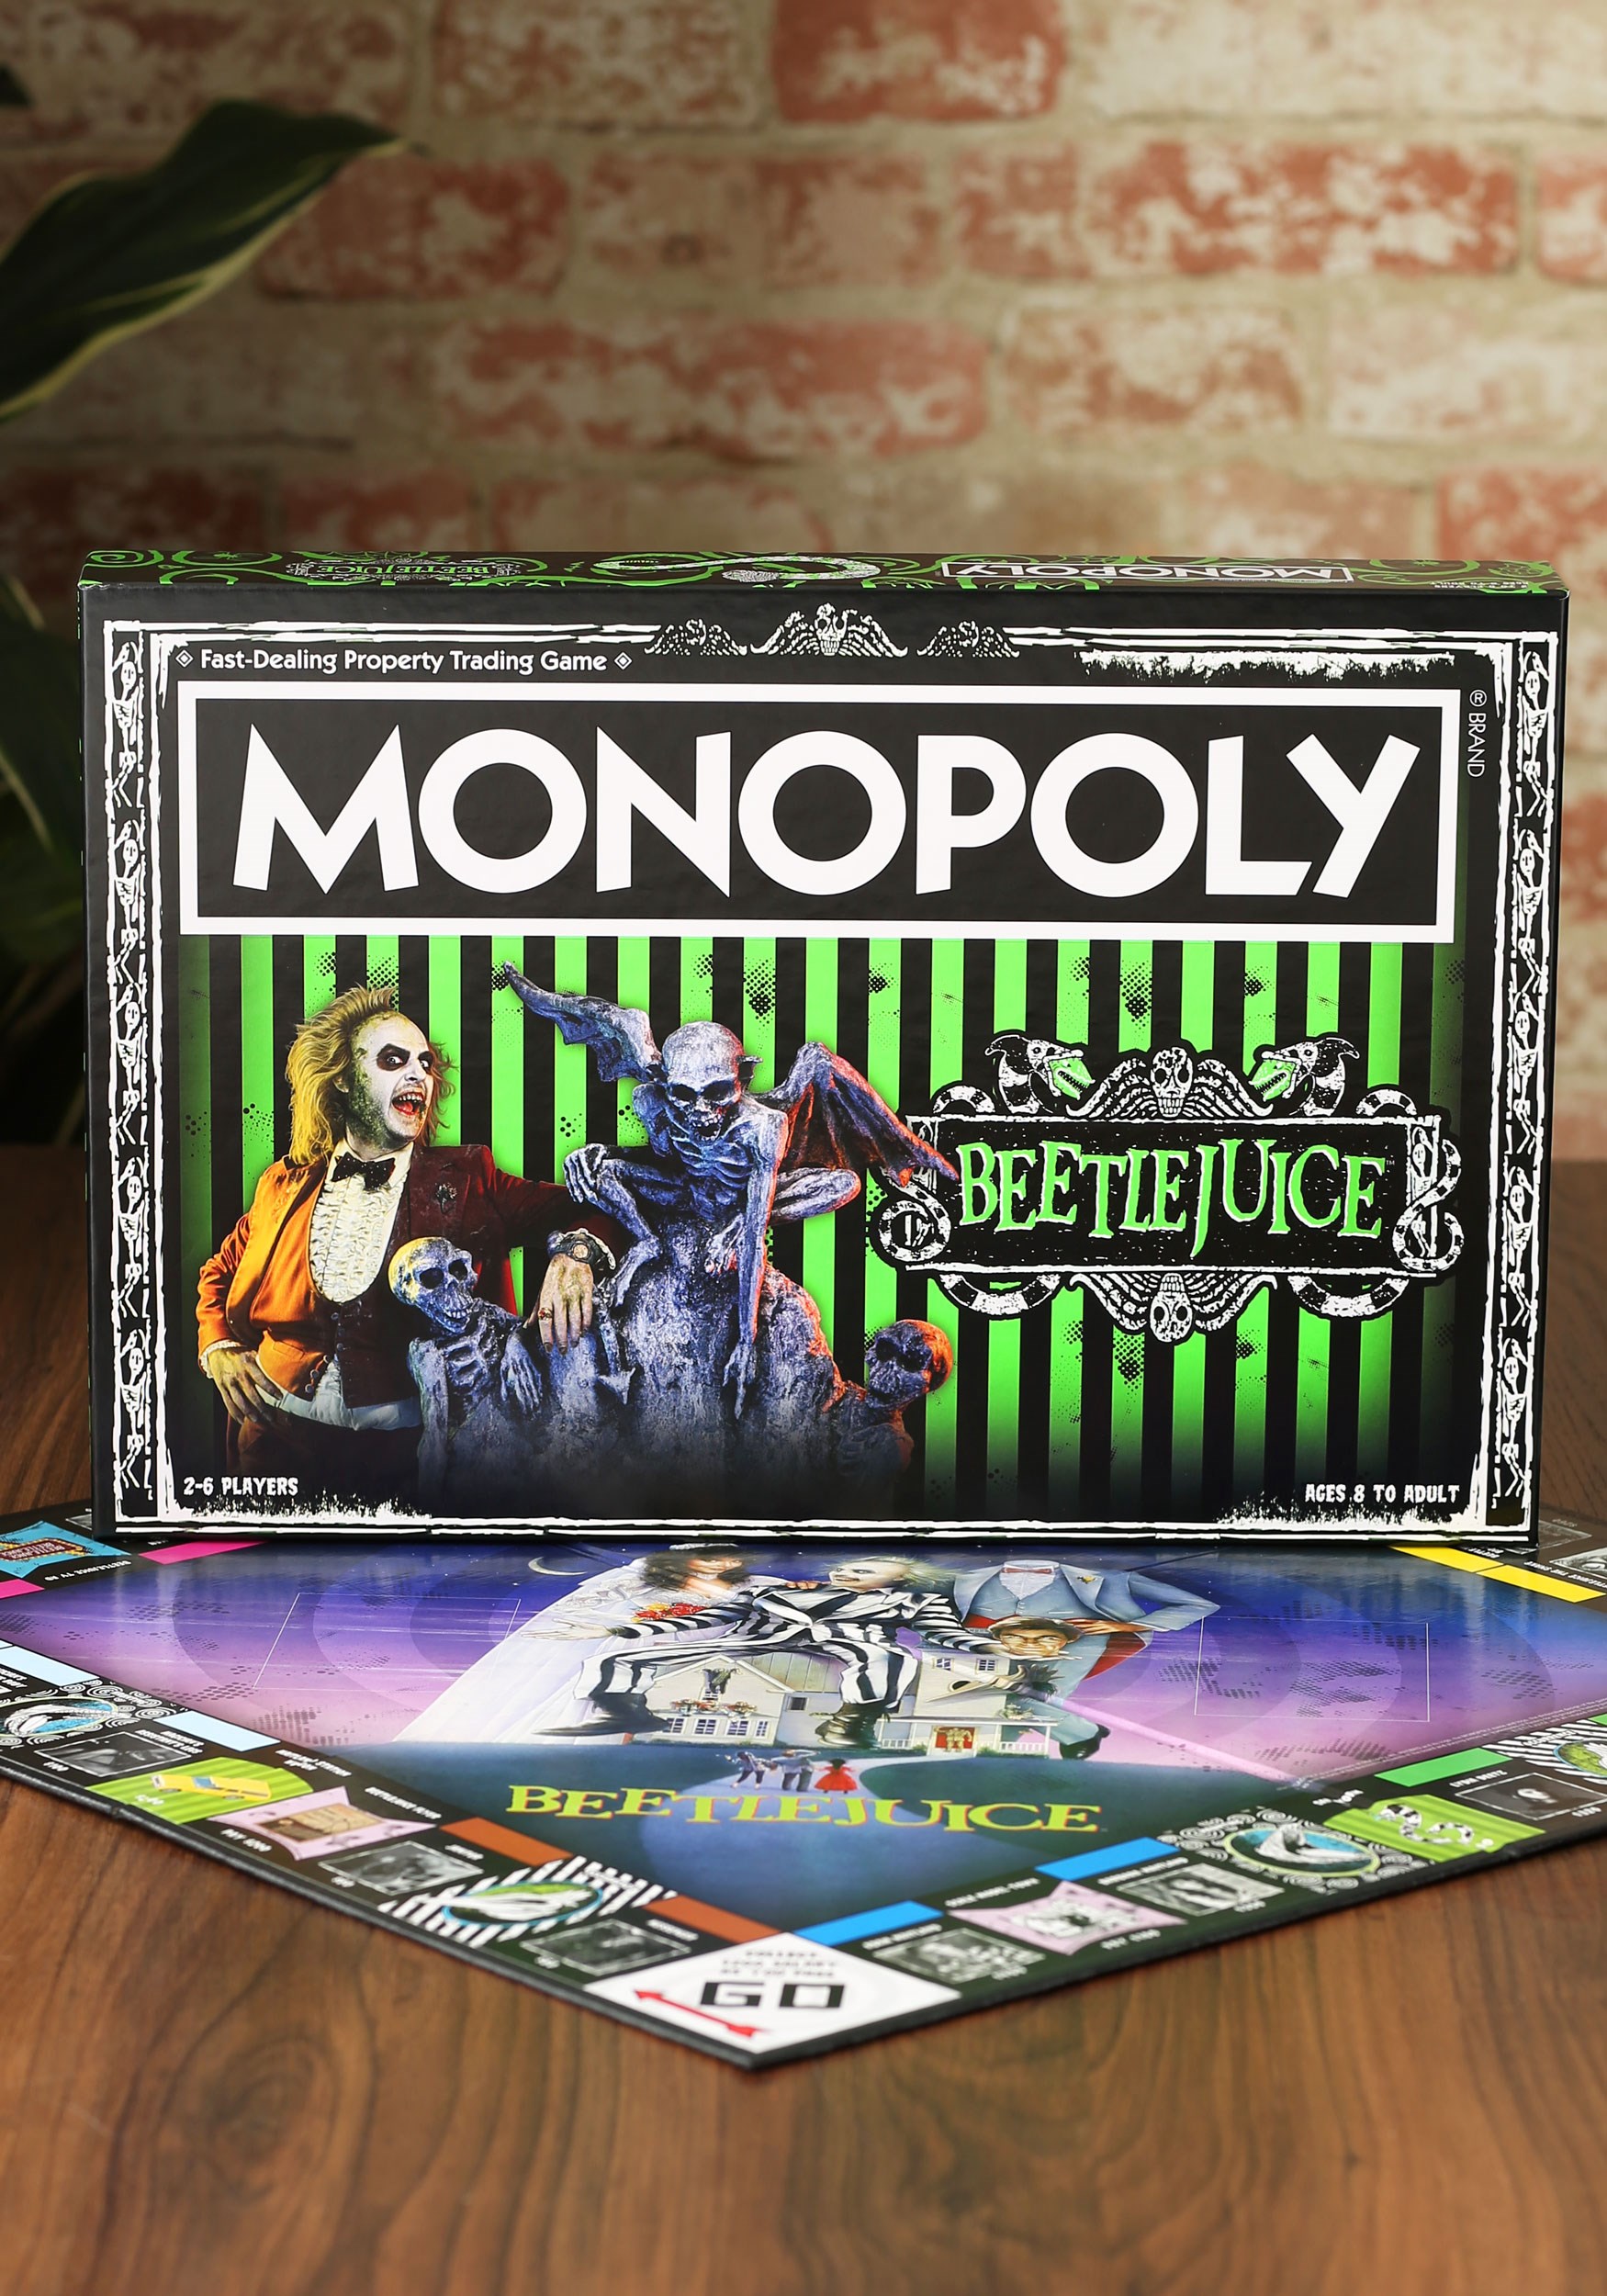 Beetlejuice Edition Game MONOPOLY